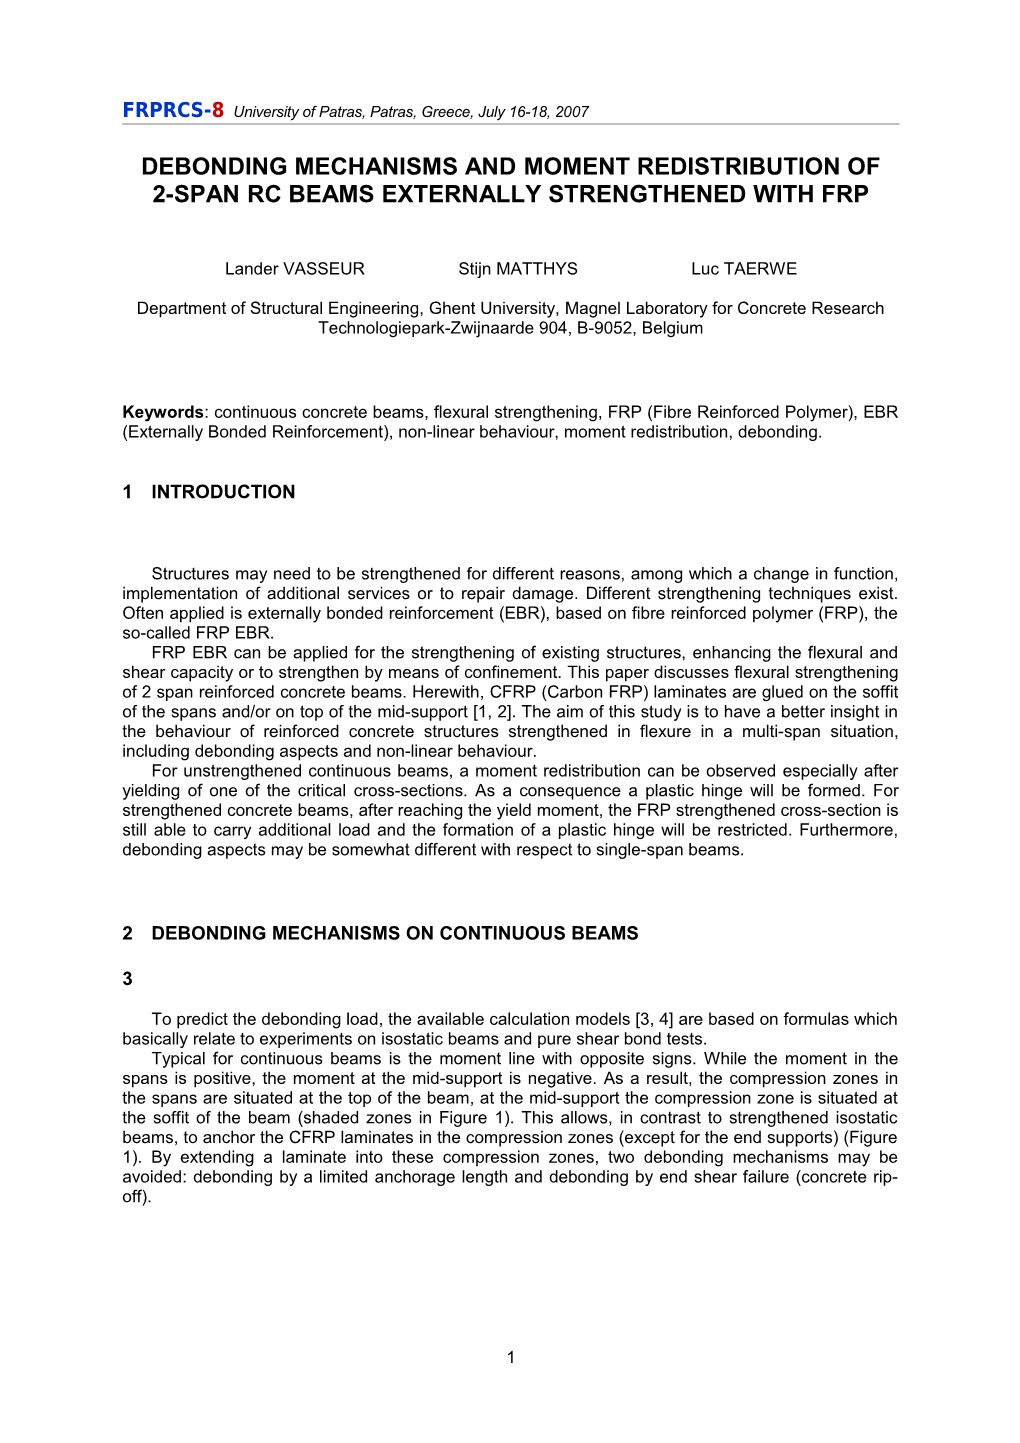 FRPRCS-8 Full Paper Format